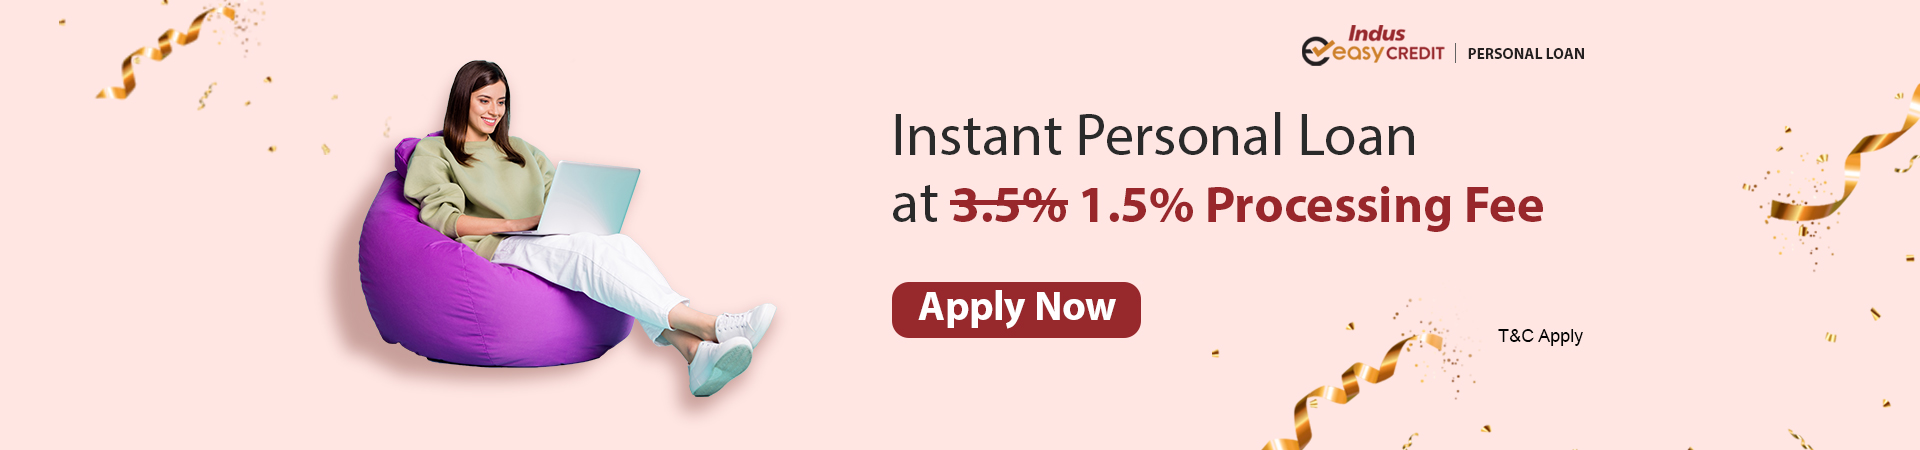 Instant Personal Loan - IndusInd Bank